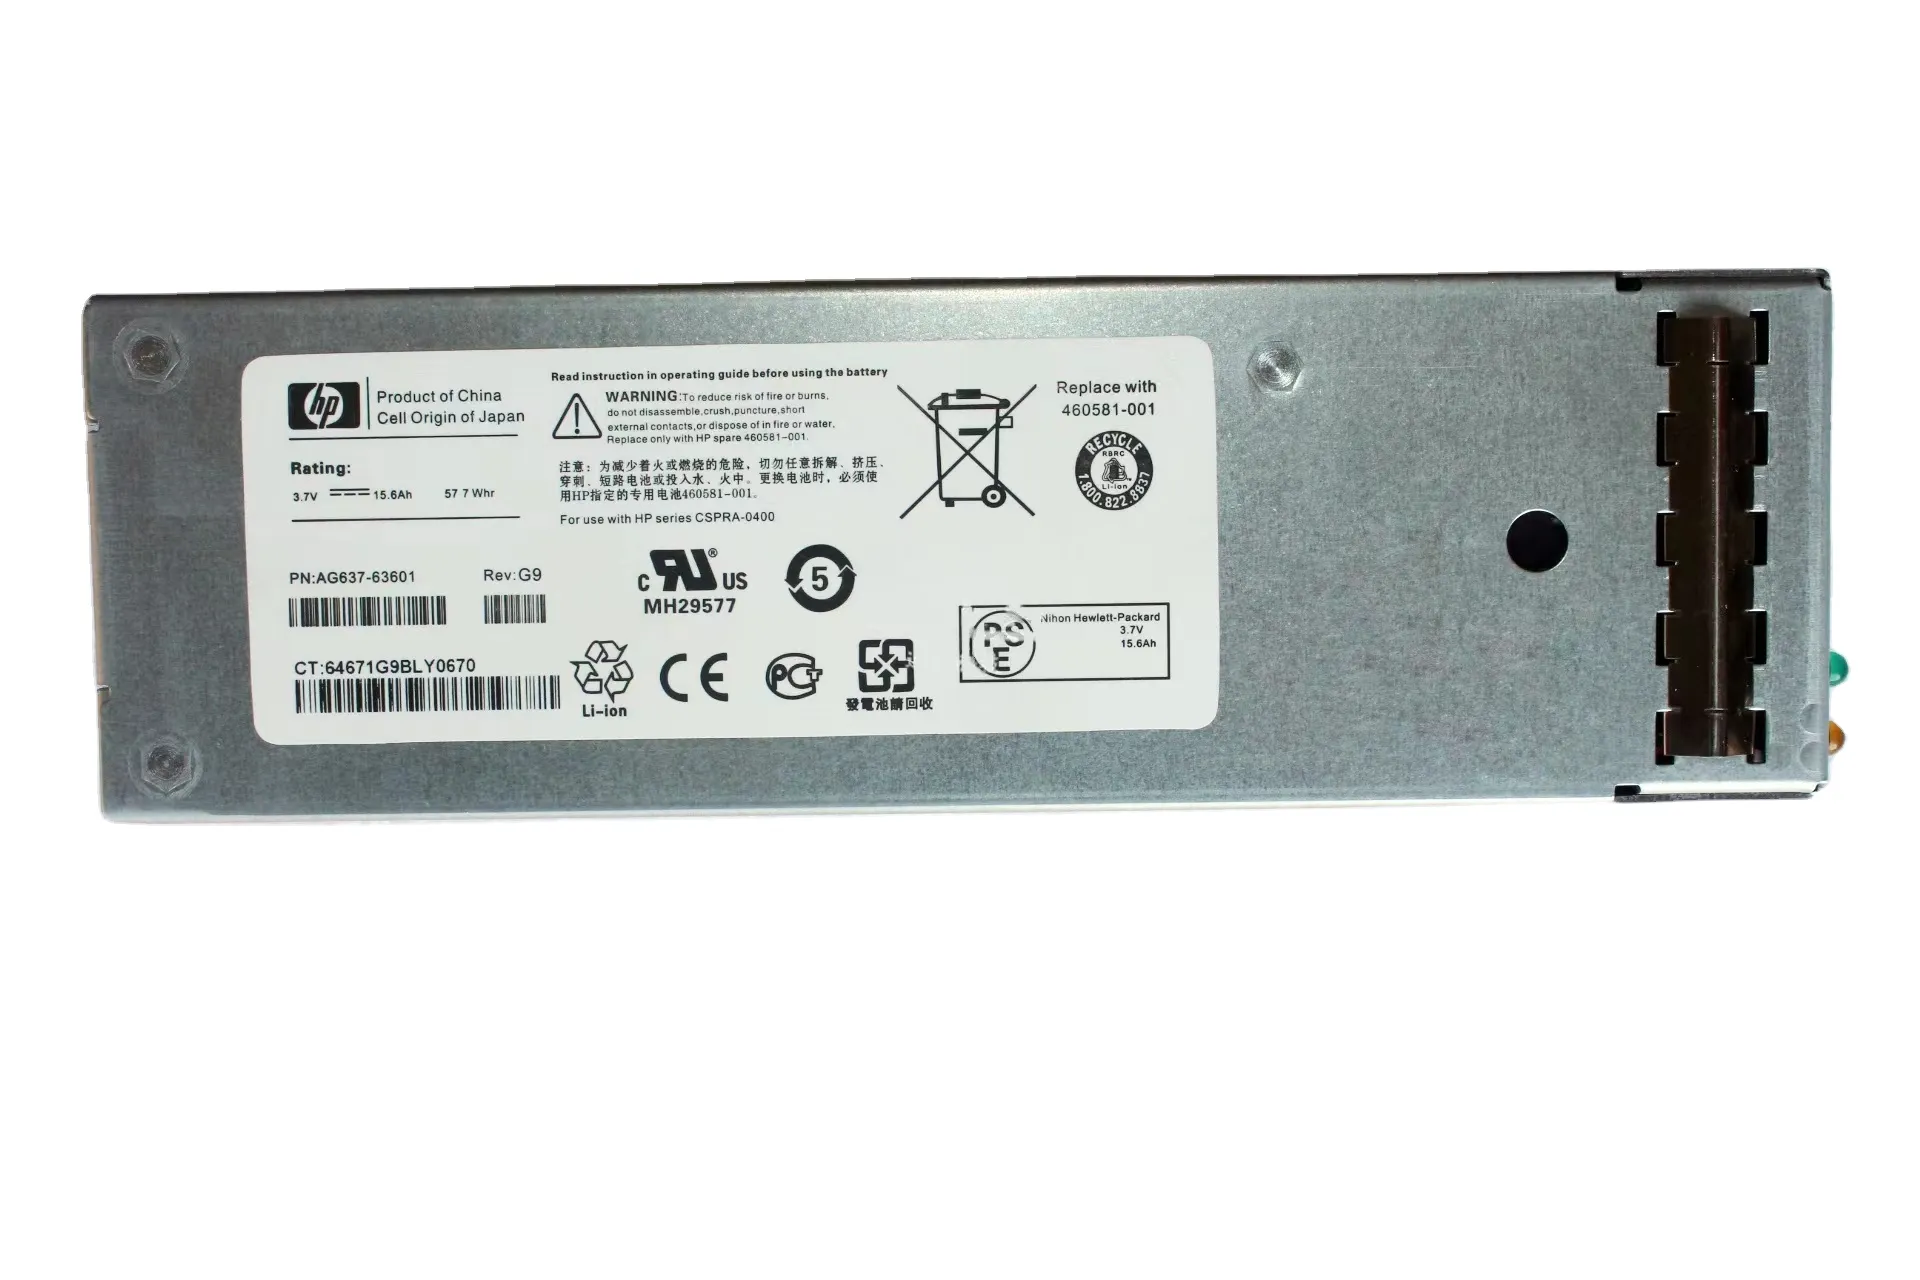 Controller-Batterie für HP EVA4400 P6300 P6350 AG637-63601 460581-001 Voll getestet